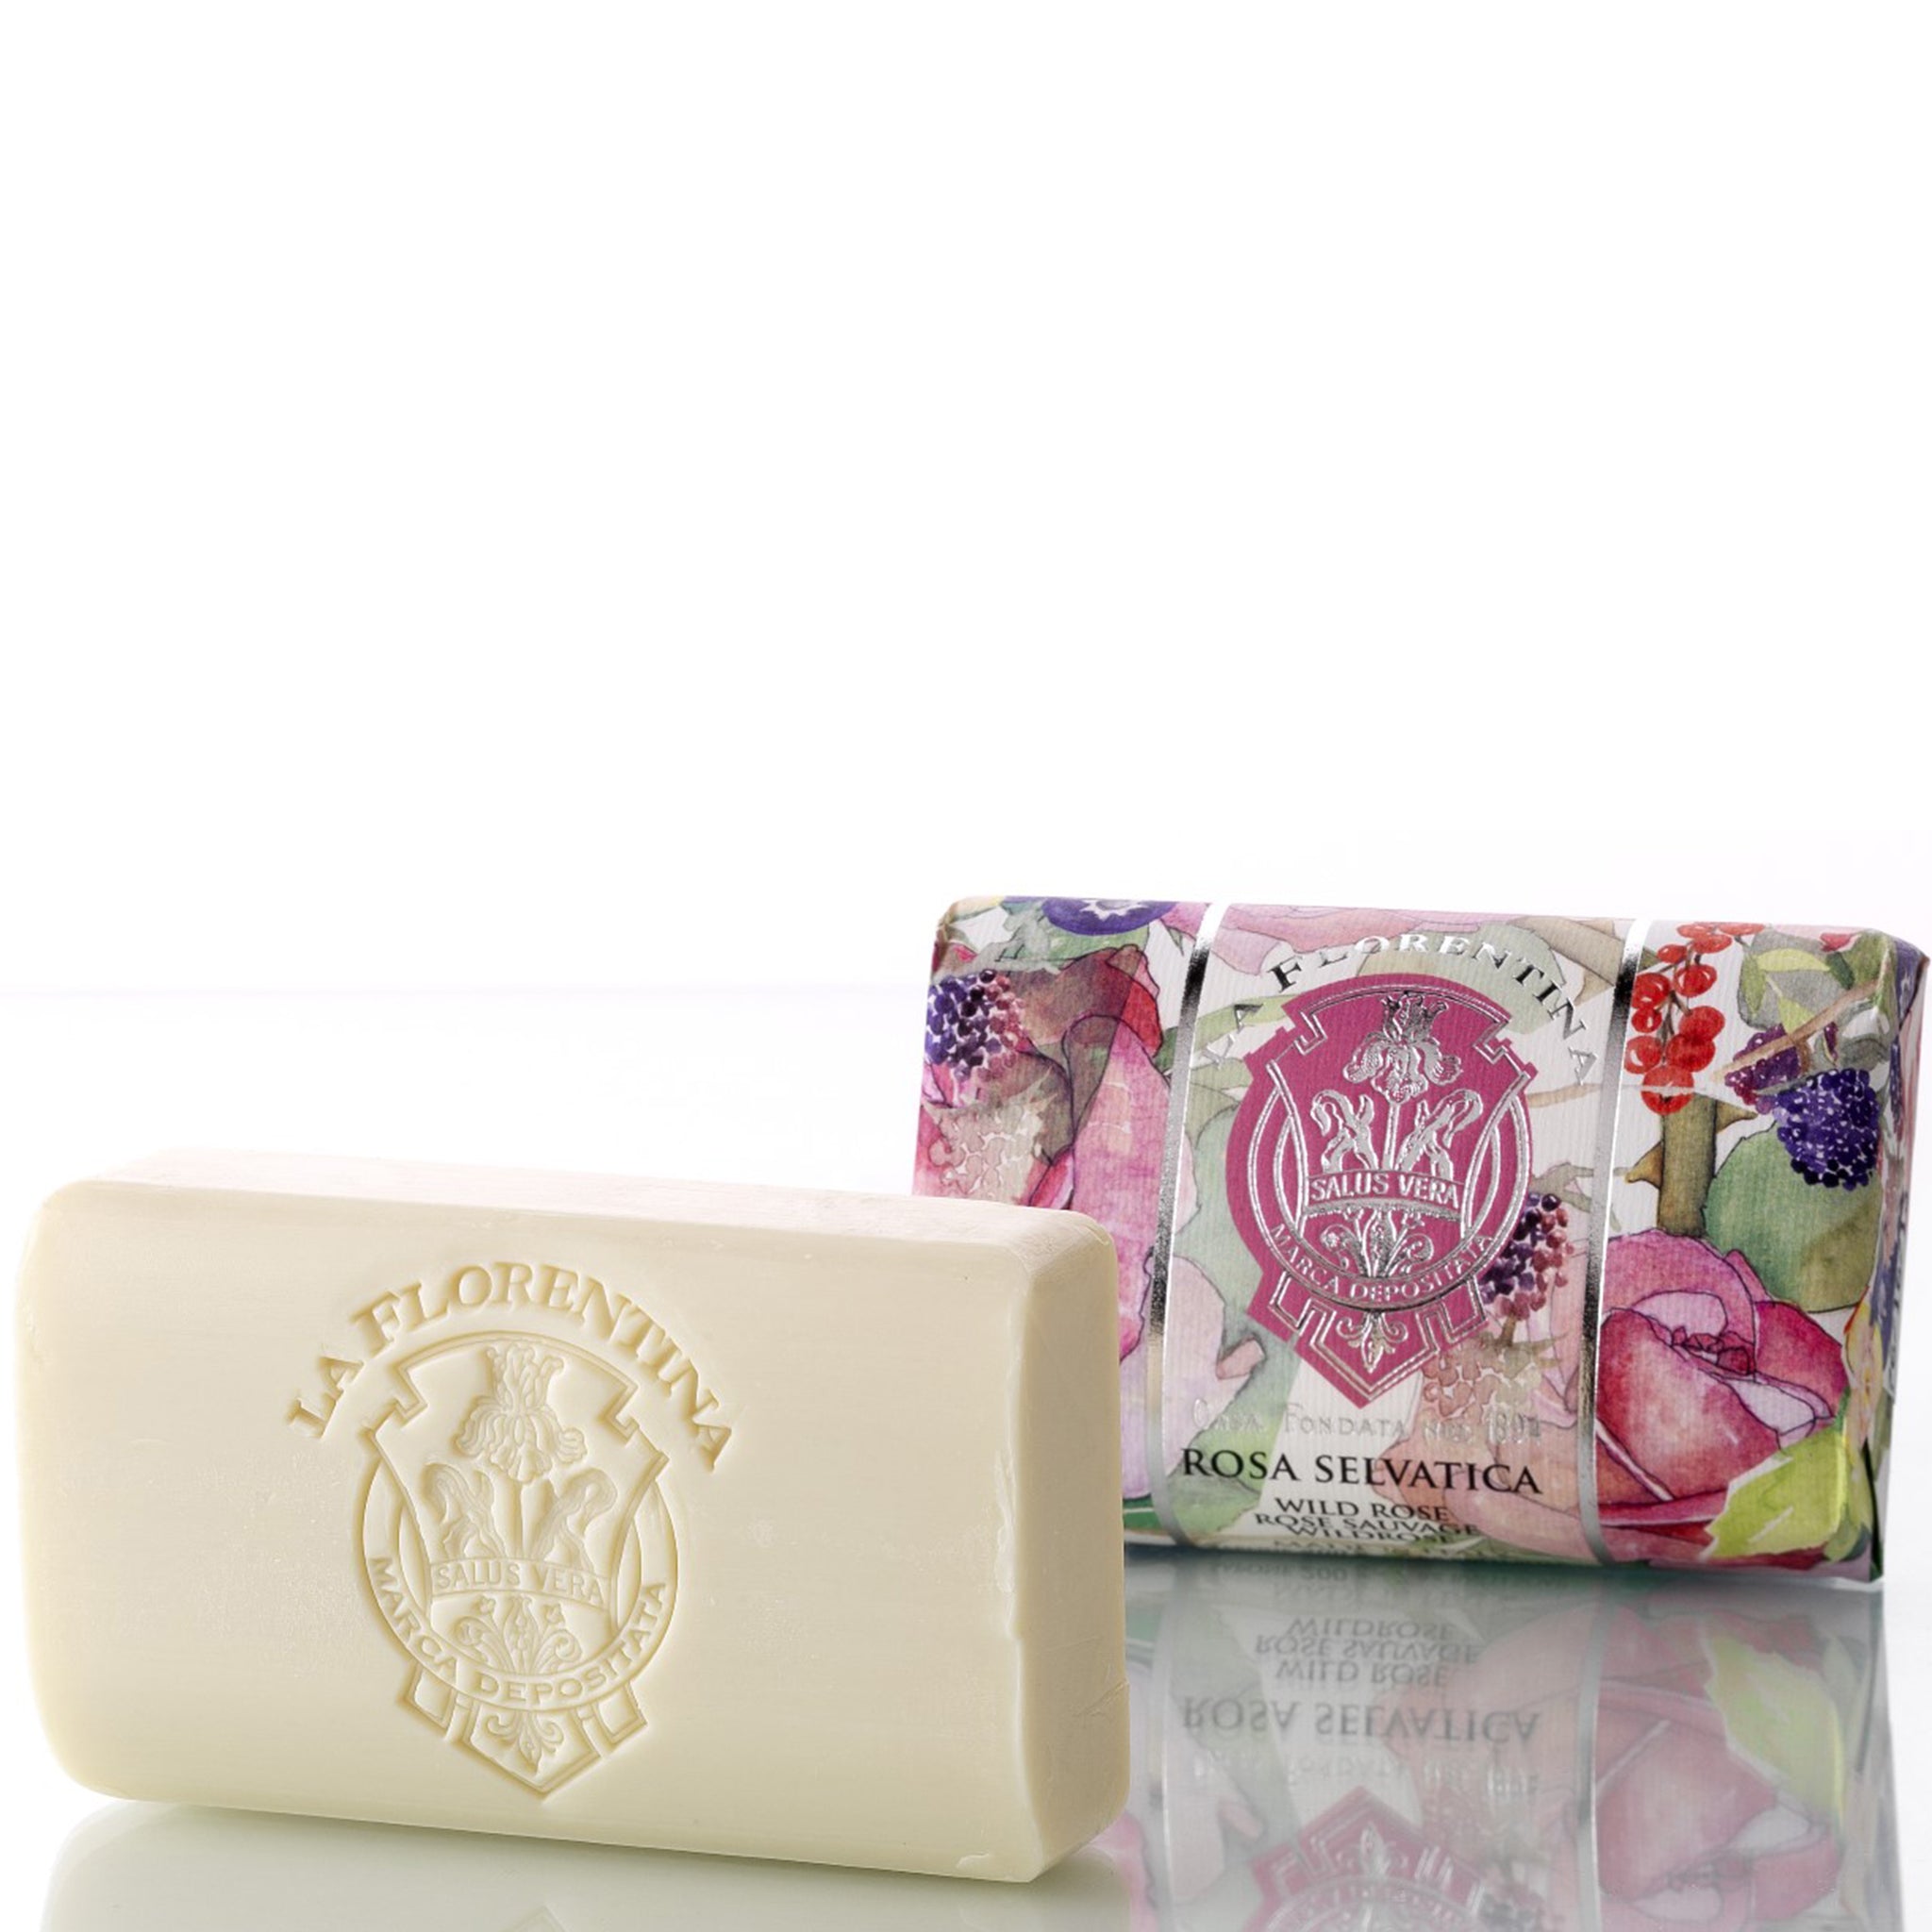 La Florentina Wild Rose 200g Bar Soap